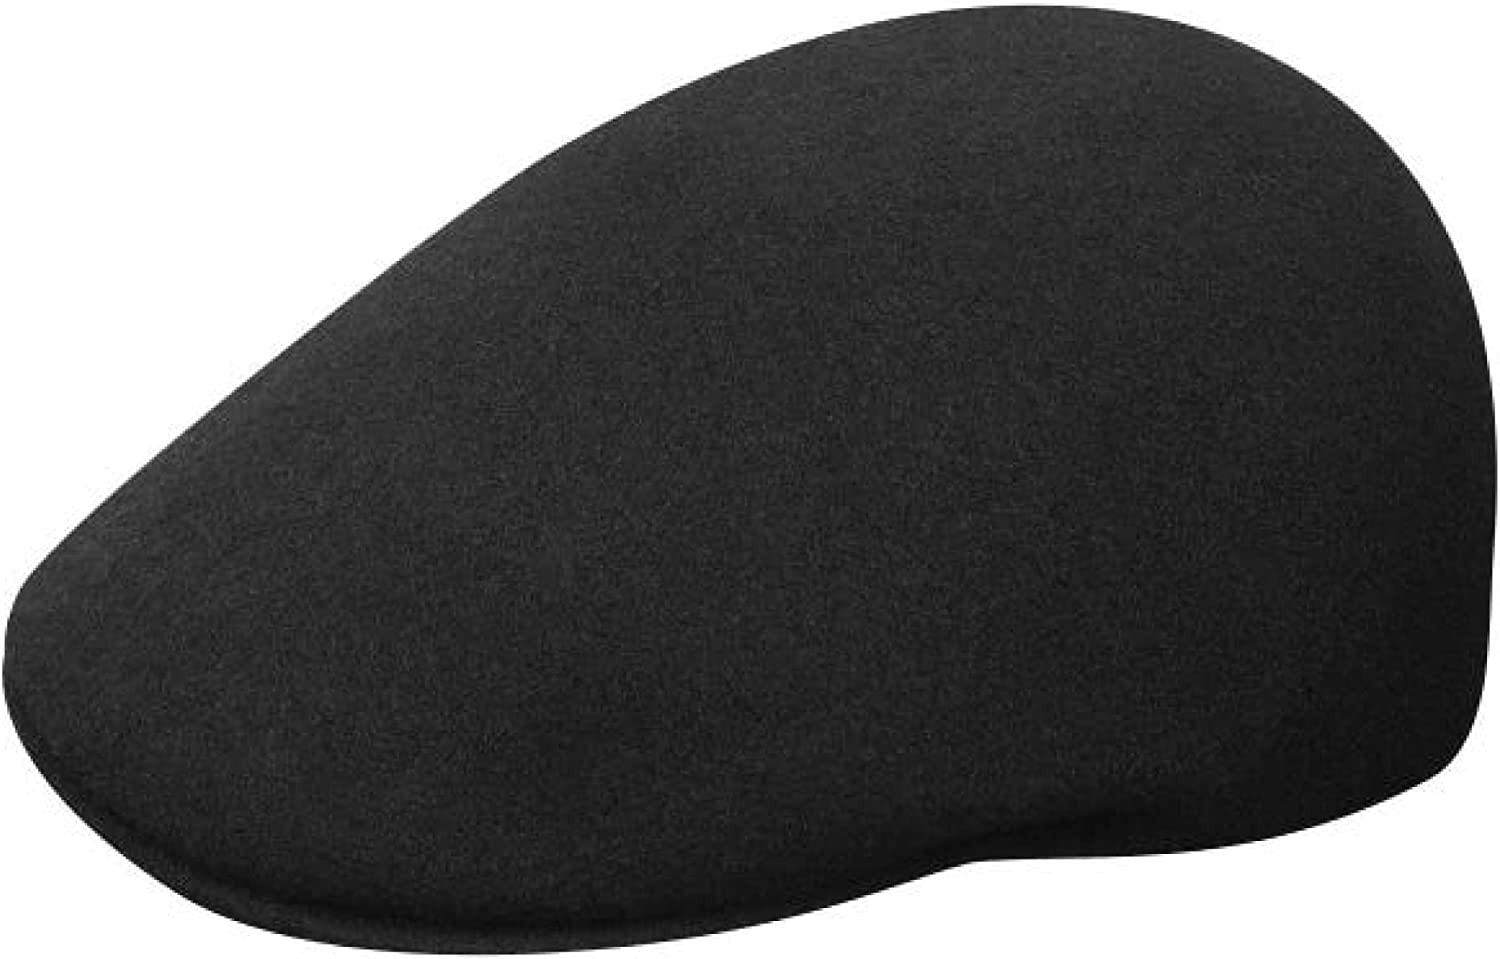 Kangol Seamless Wool 507 Felt Hat for Men and Women - Black/Gold - M